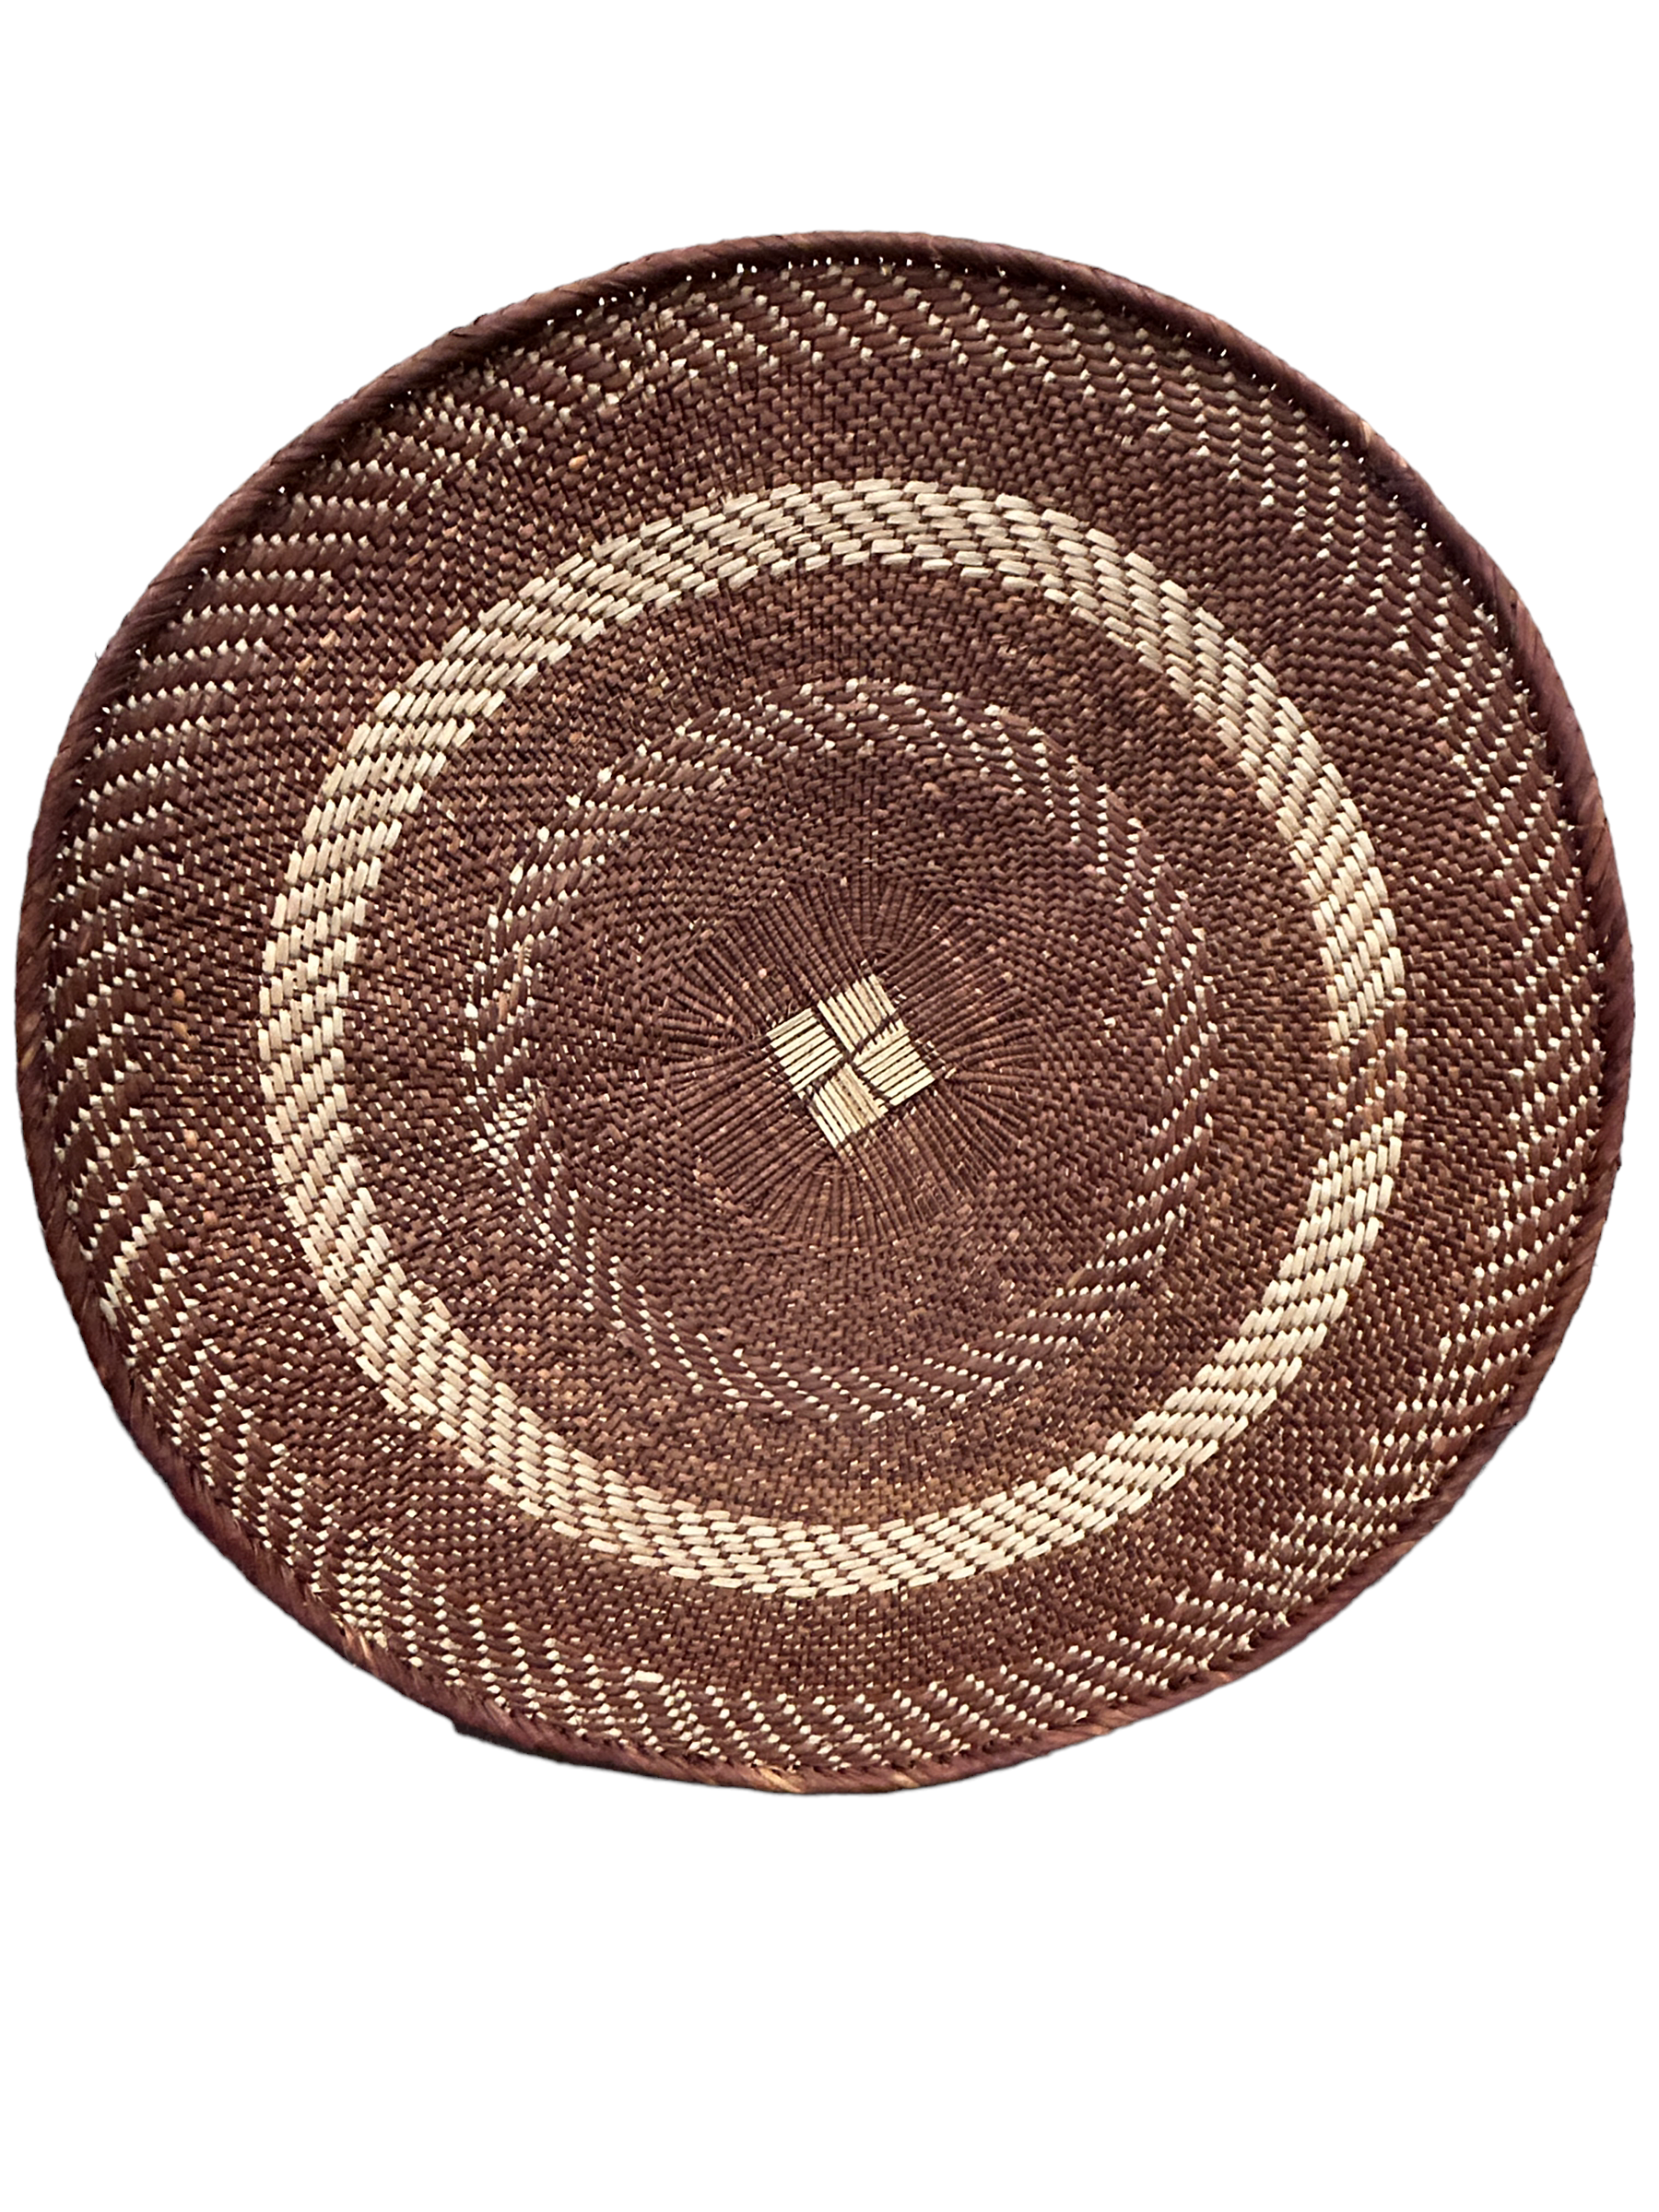 botanicalboysuk Tonga Basket Natural (60-13)